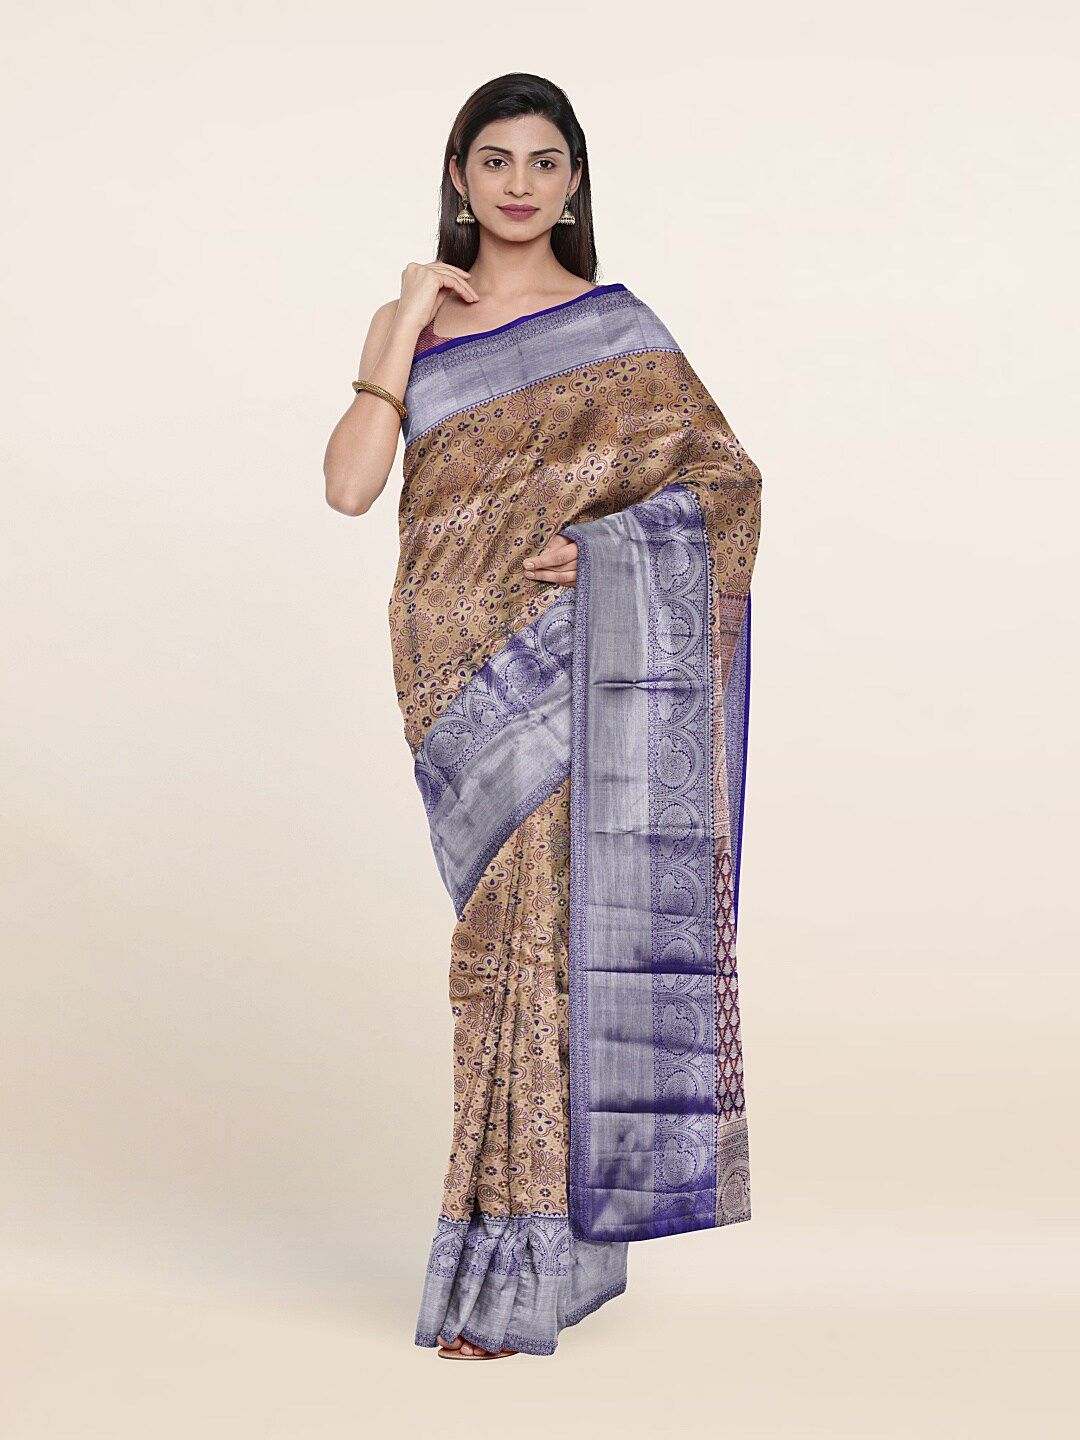 Pothys Ethnic Motifs Zari Pure Silk Saree Price in India